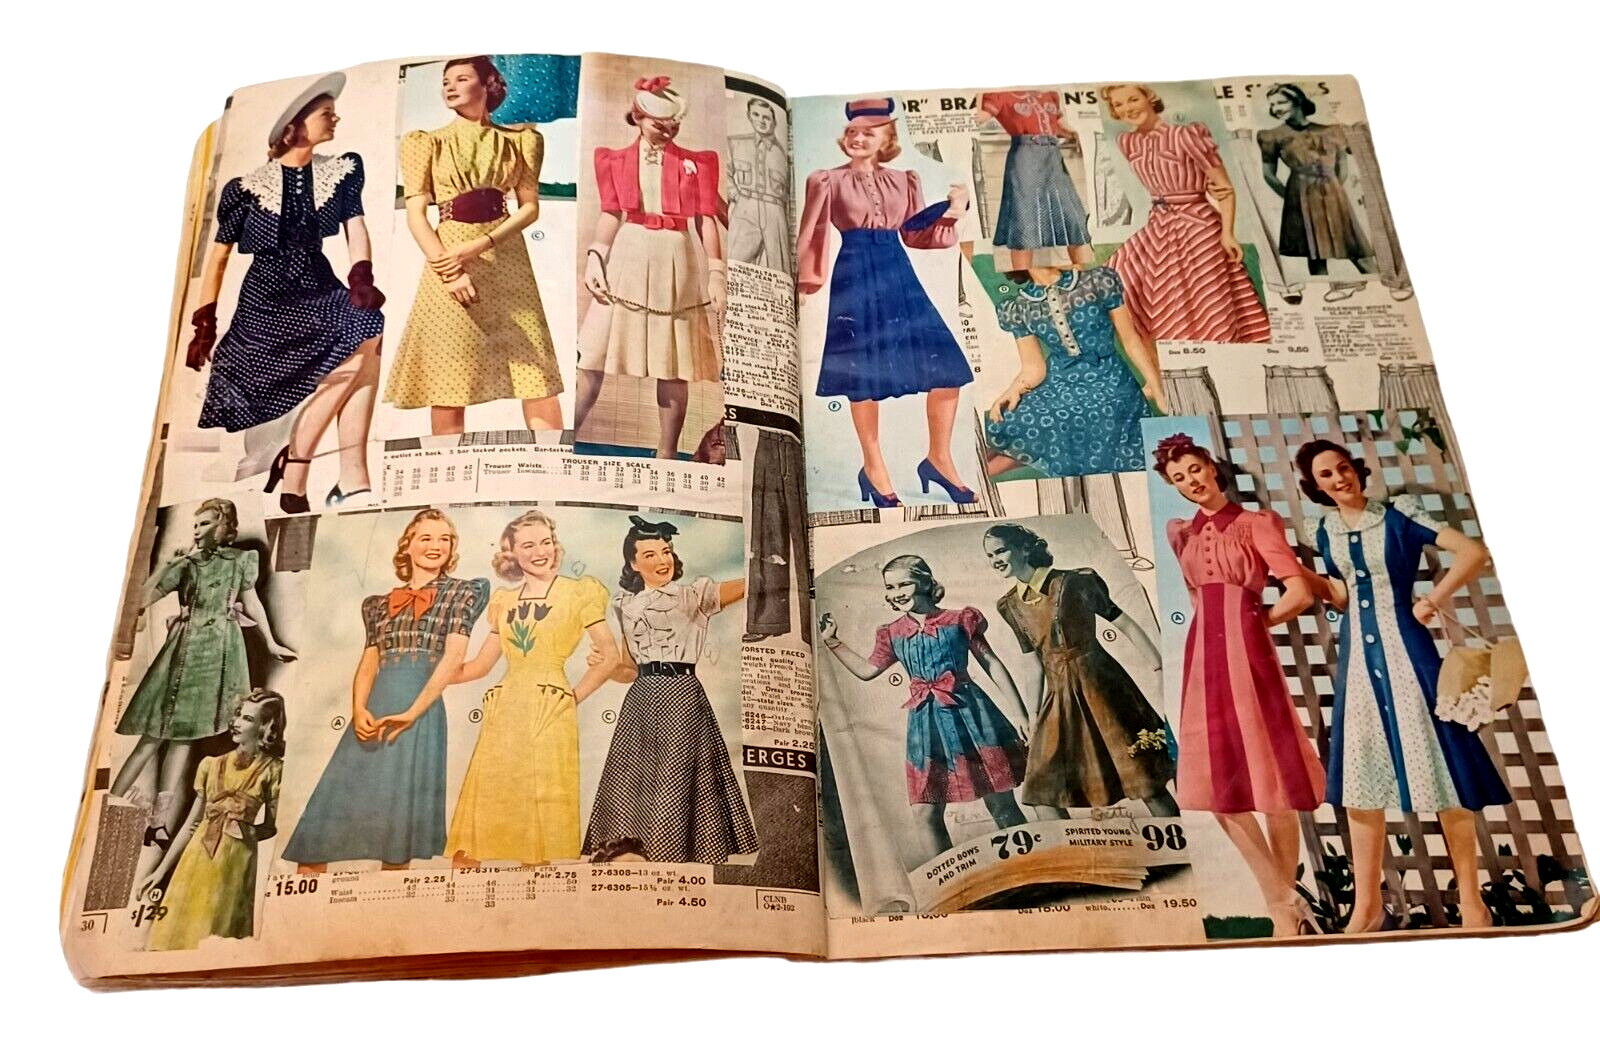 1938 Scrapbook Smash Book Butler Brothers Catalog Fashion & Dress Design